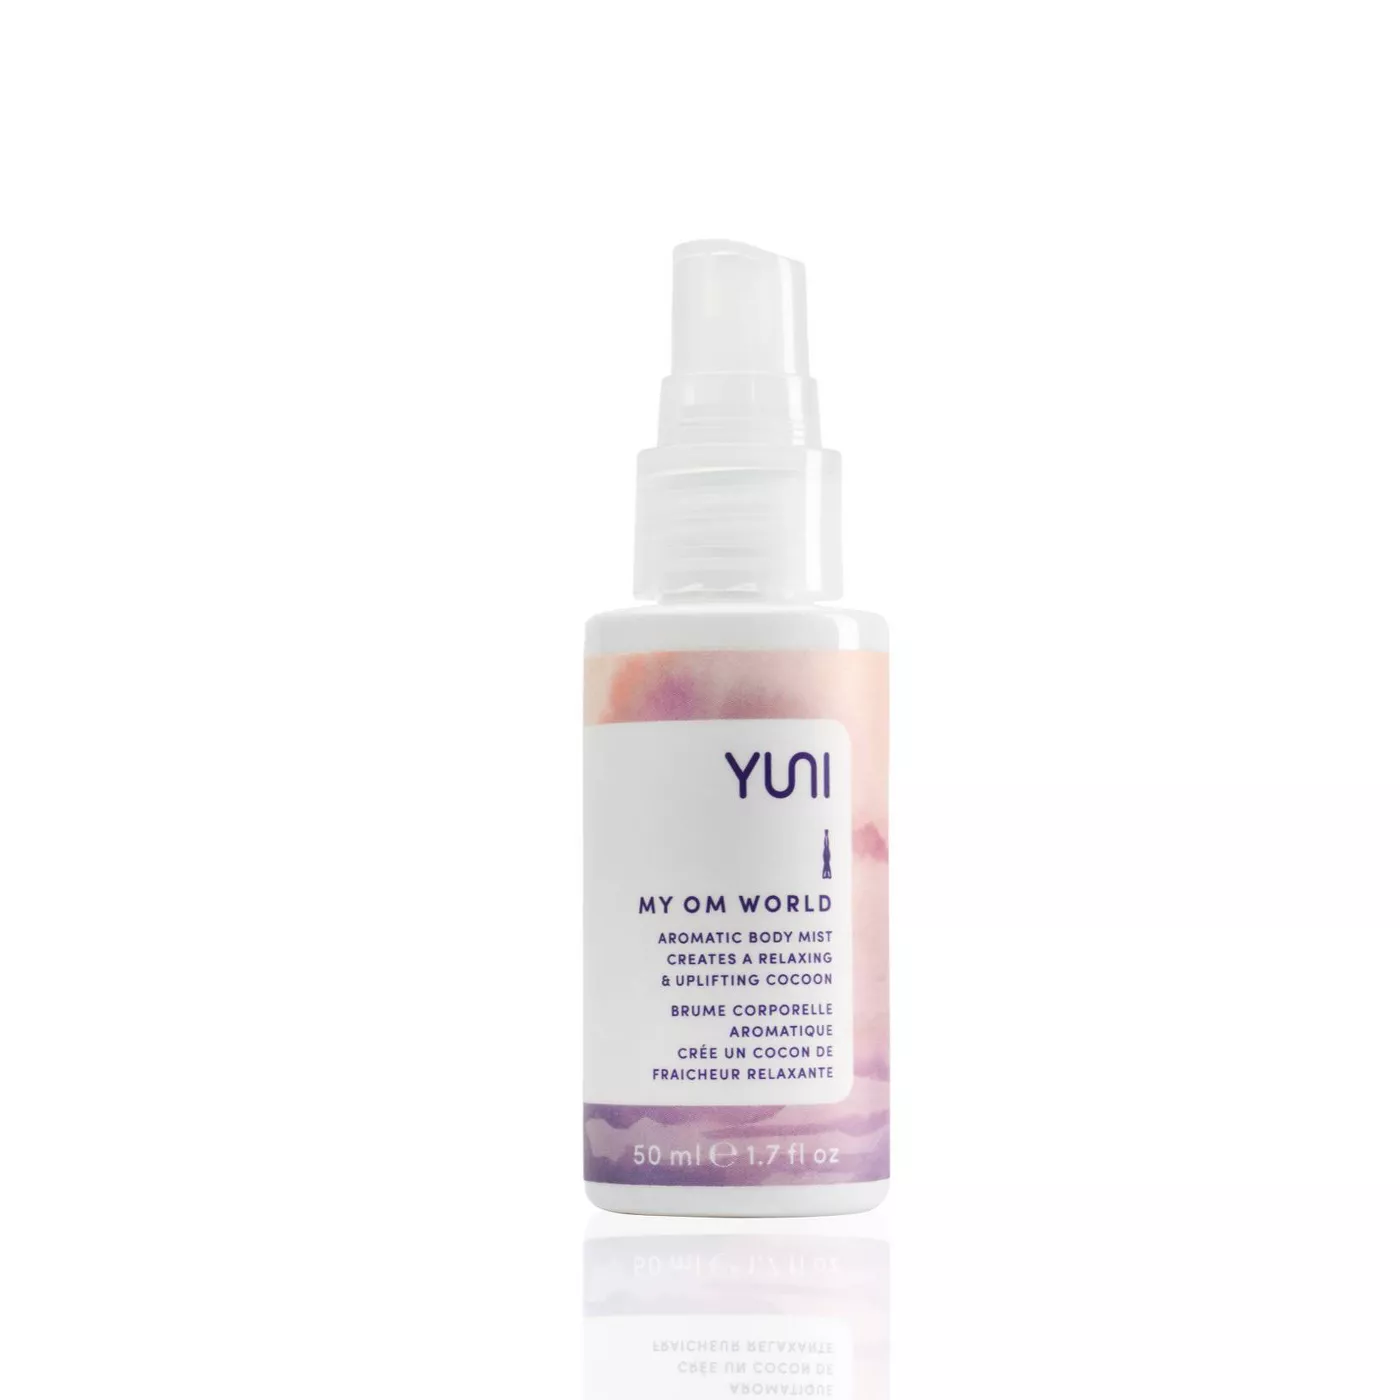 YUNI : My OM World Calming Aromatherapy Body Mist 1.7 oz 50 ml - $18.00